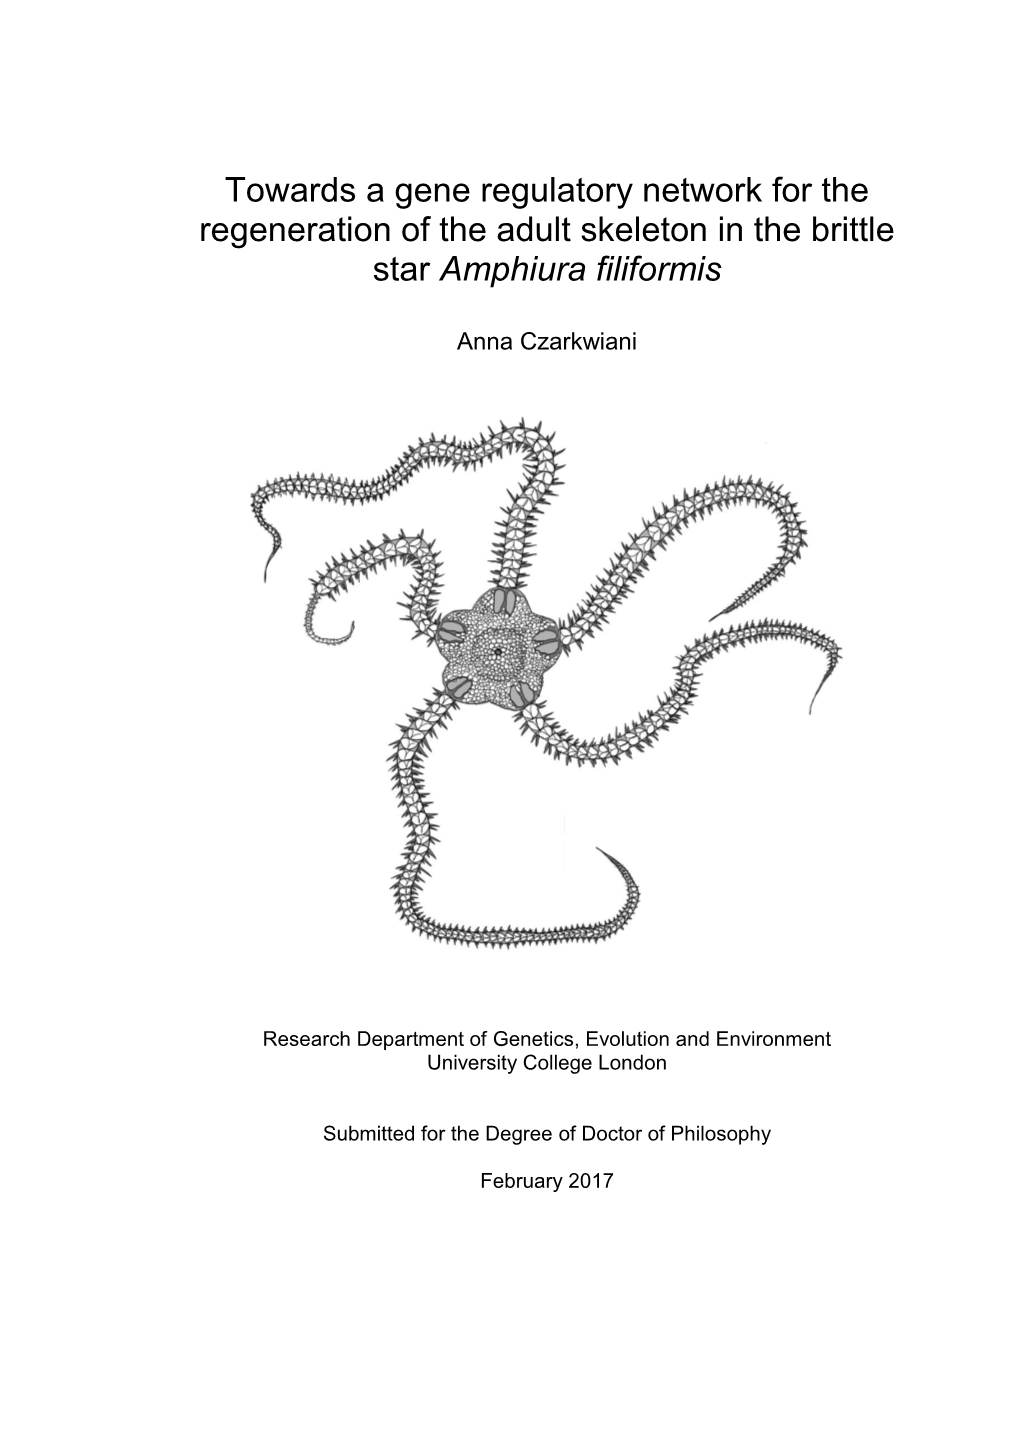 Towards a Gene Regulatory Network for the Regeneration of the Adult Skeleton in the Brittle Star Amphiura Filiformis